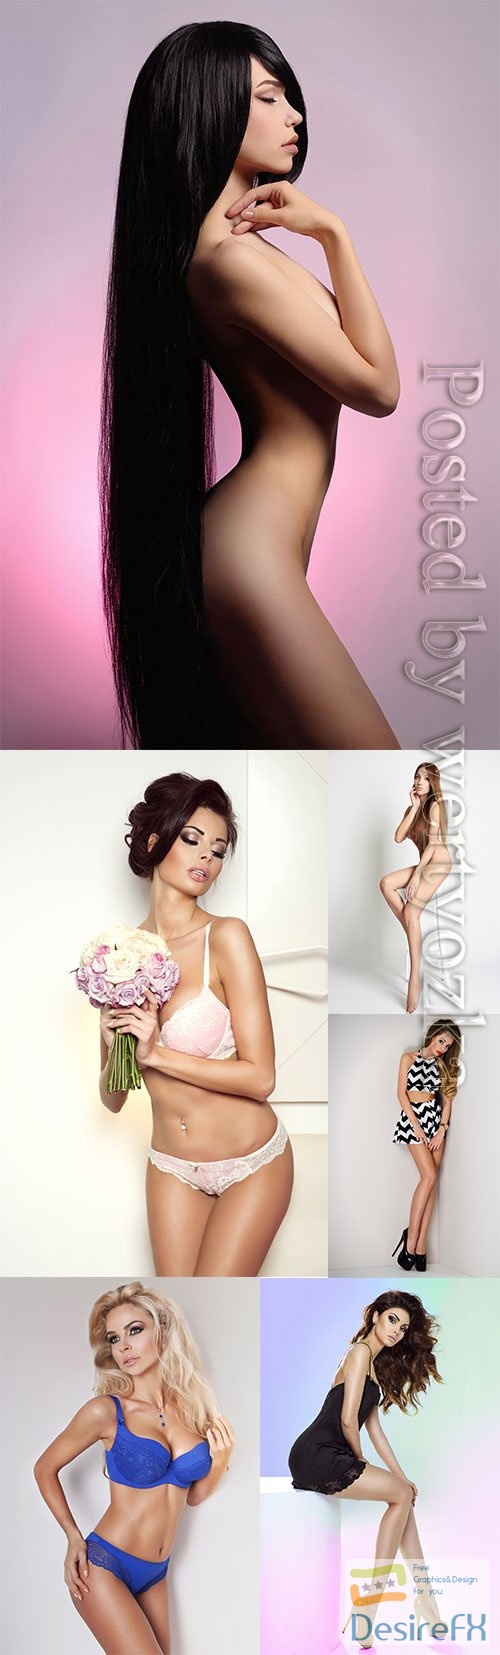 Luxury women in lingerie posing stock photo vol 29